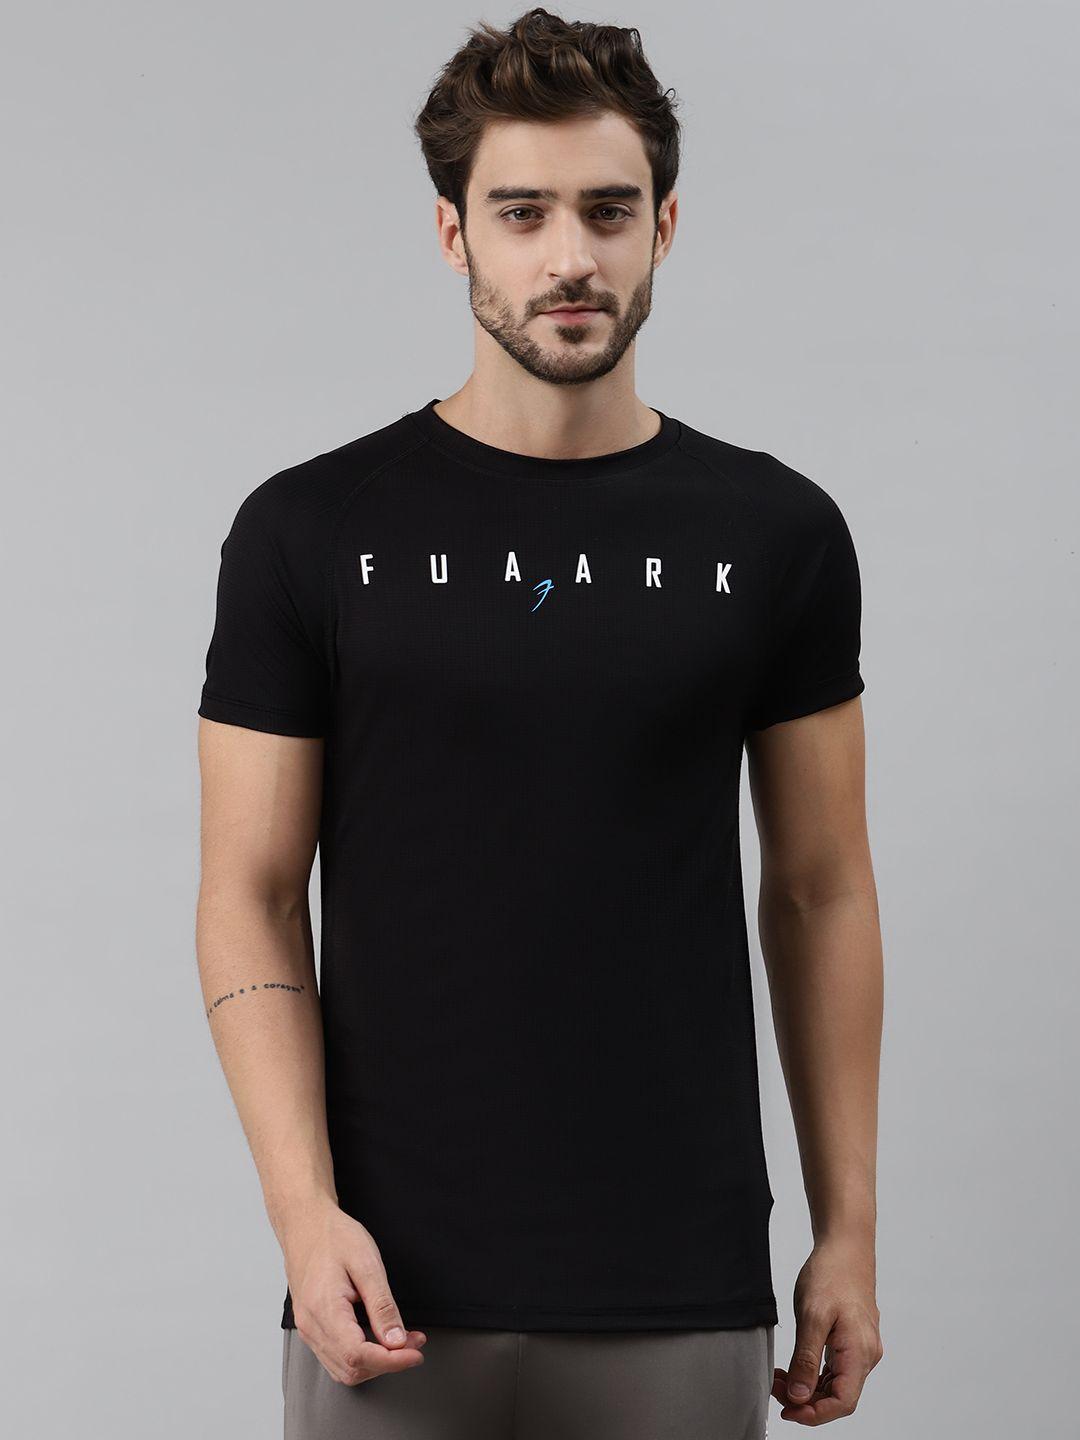 fuaark men black & white slim fit self-checked training t-shirt with brand logo detail